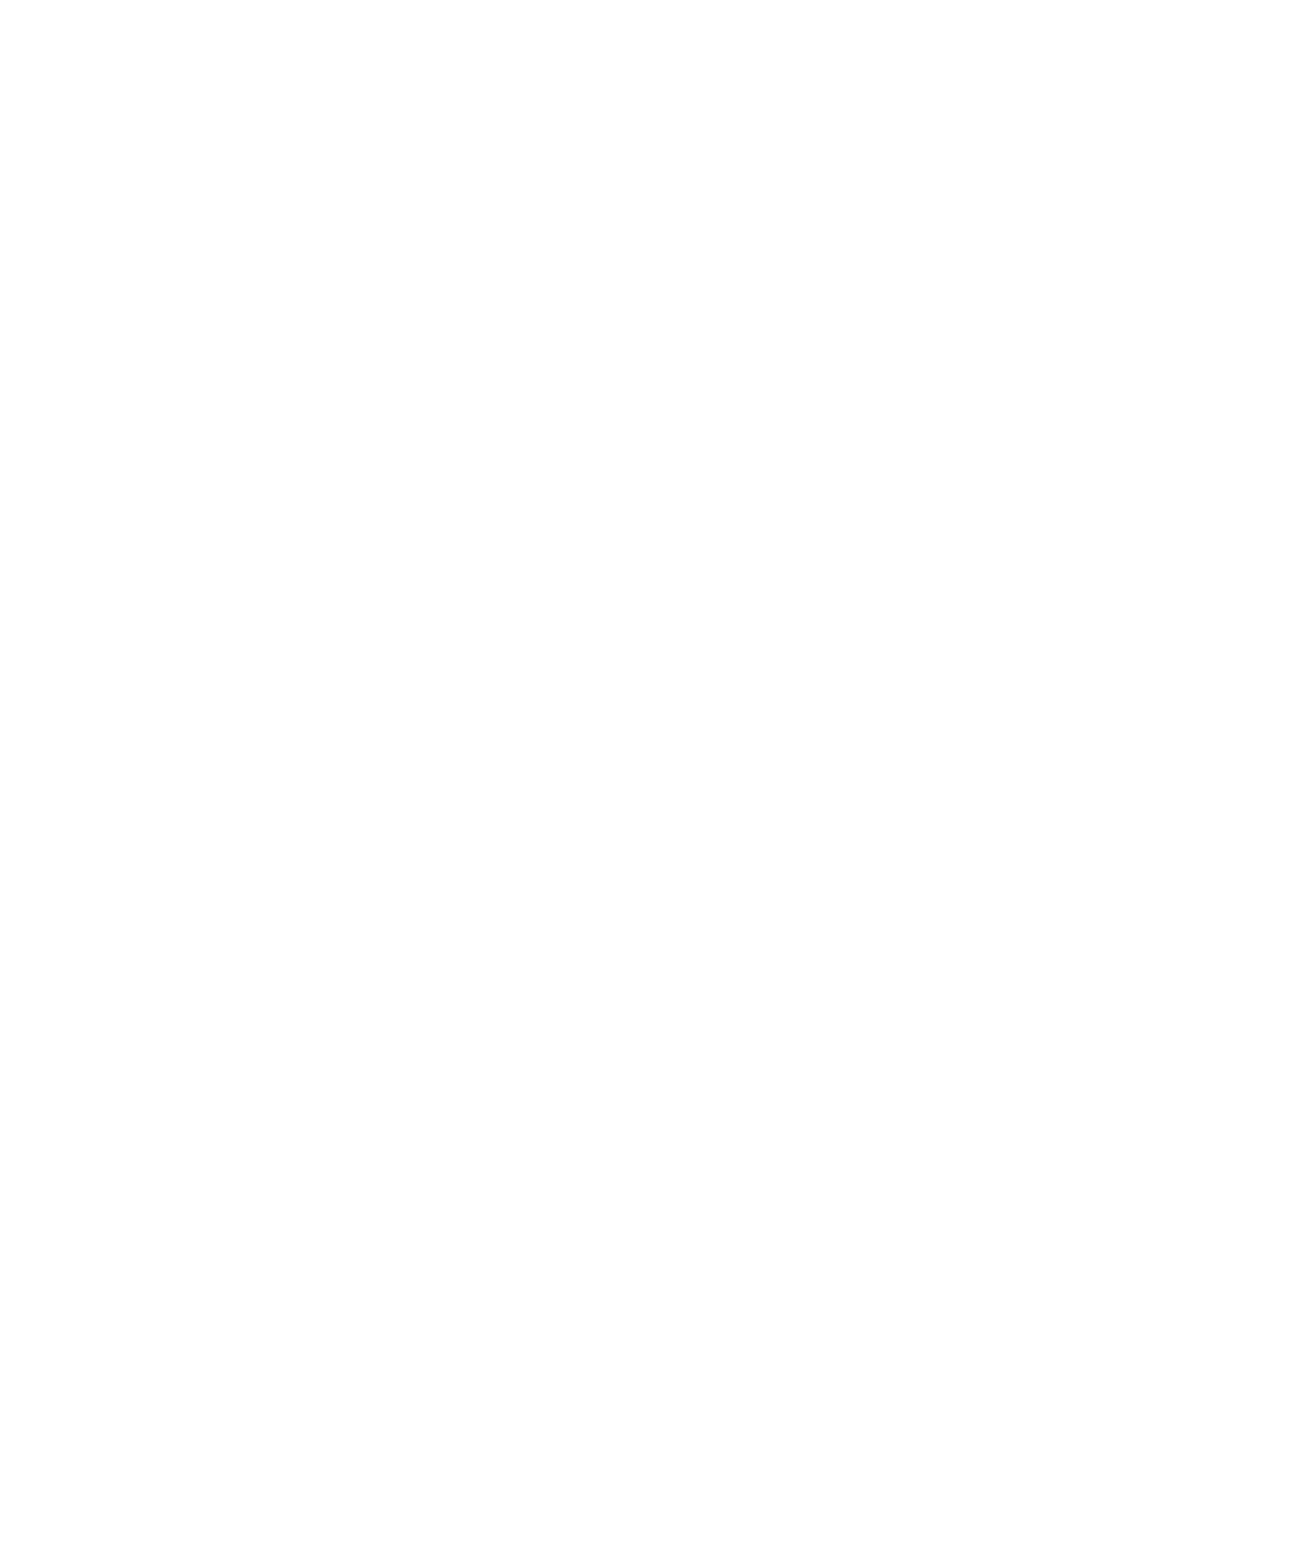 Scatec ASA logo for dark backgrounds (transparent PNG)